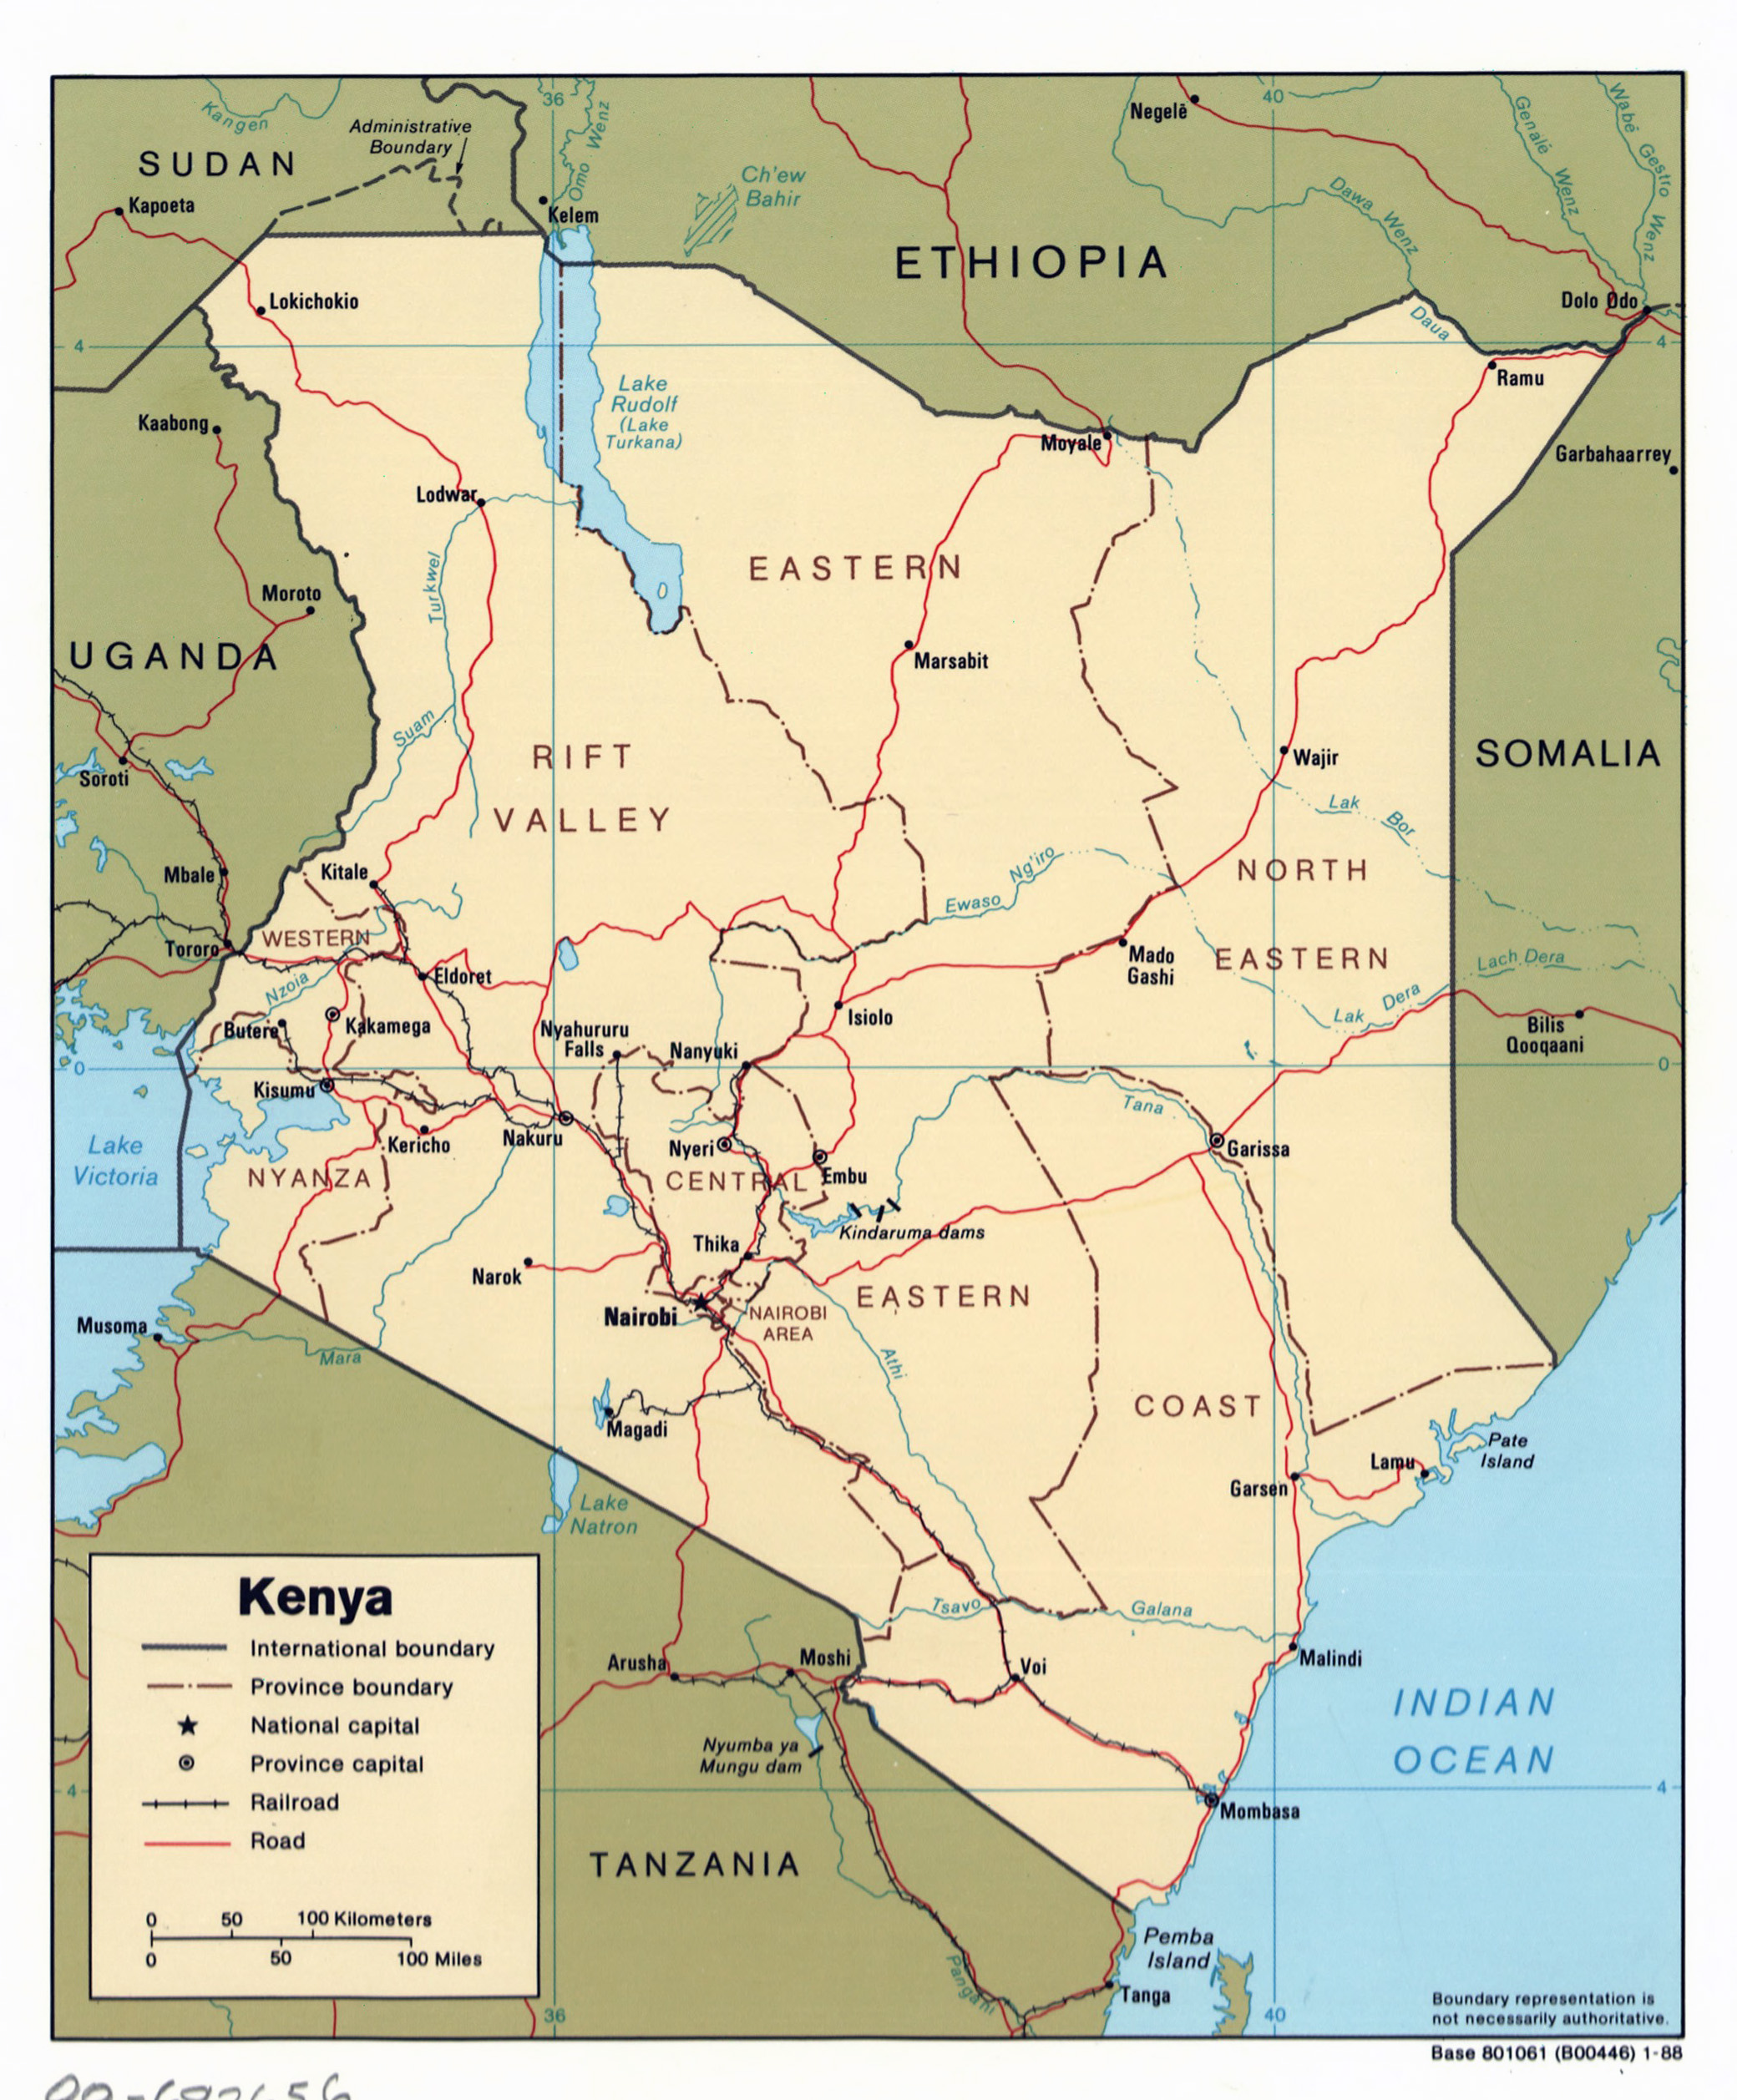 Kenya City Map : Nairobi wall map - Wall maps of countries for Europe ...